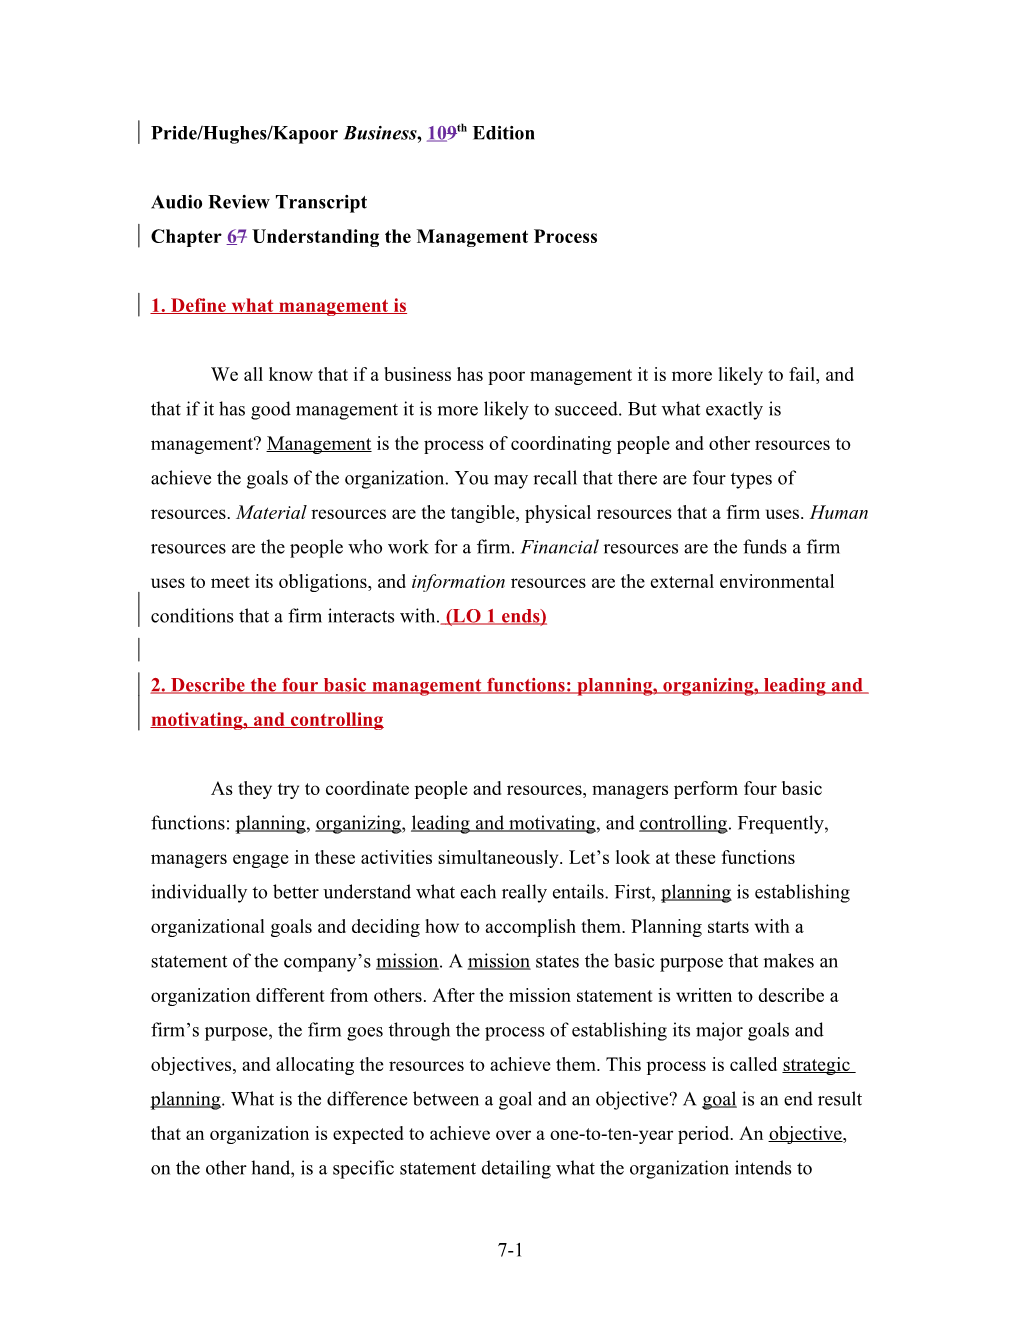 Chapter 7 Understanding the Management Process